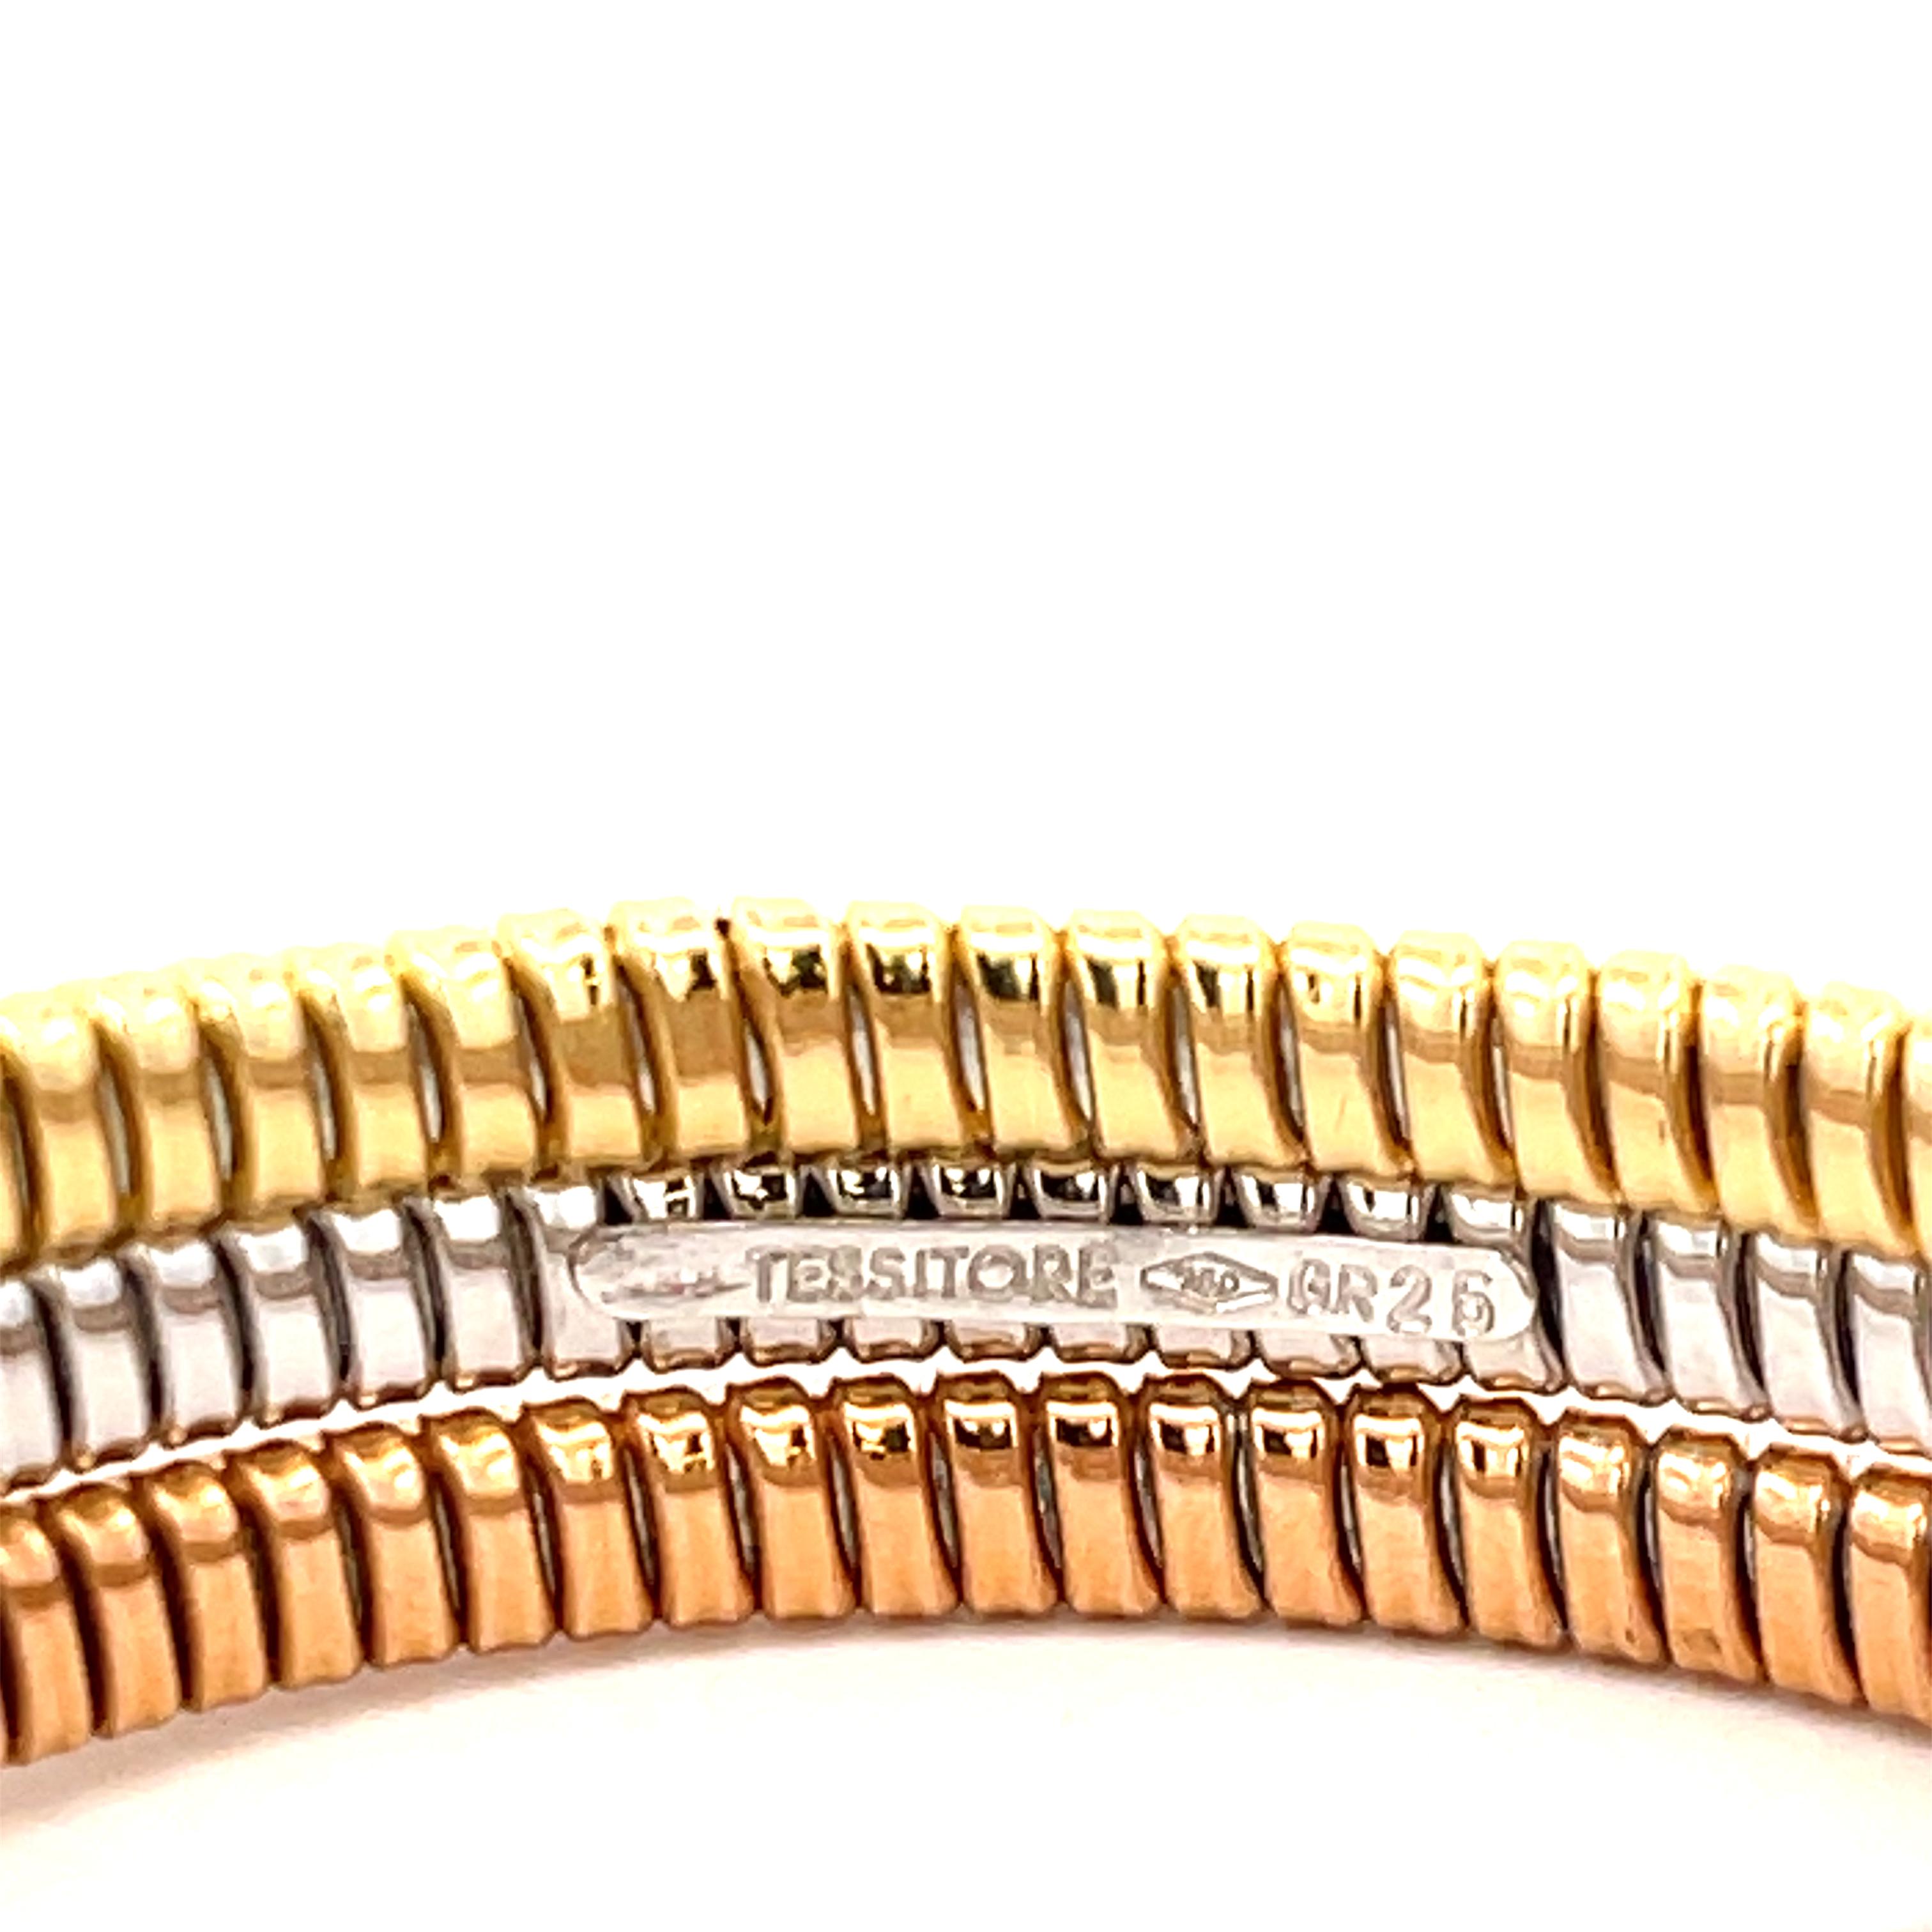 Estate Tessitore Tri-Gold Cable Wrap Bracelet in 18K Gold. Size 7, flexible.
44.8 Grams
1